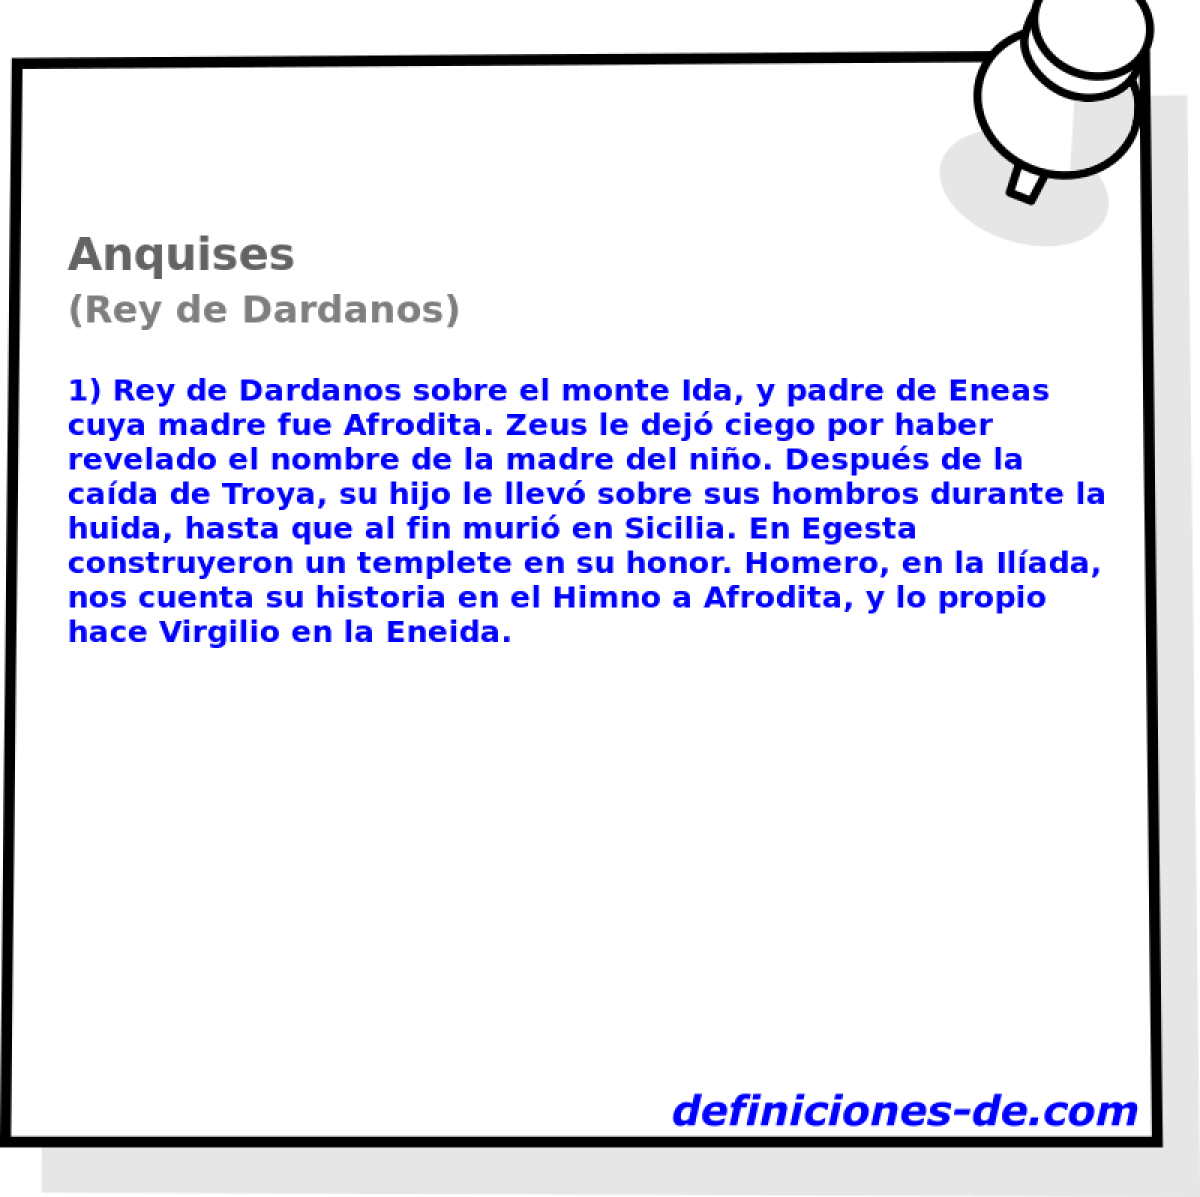 Anquises (Rey de Dardanos)